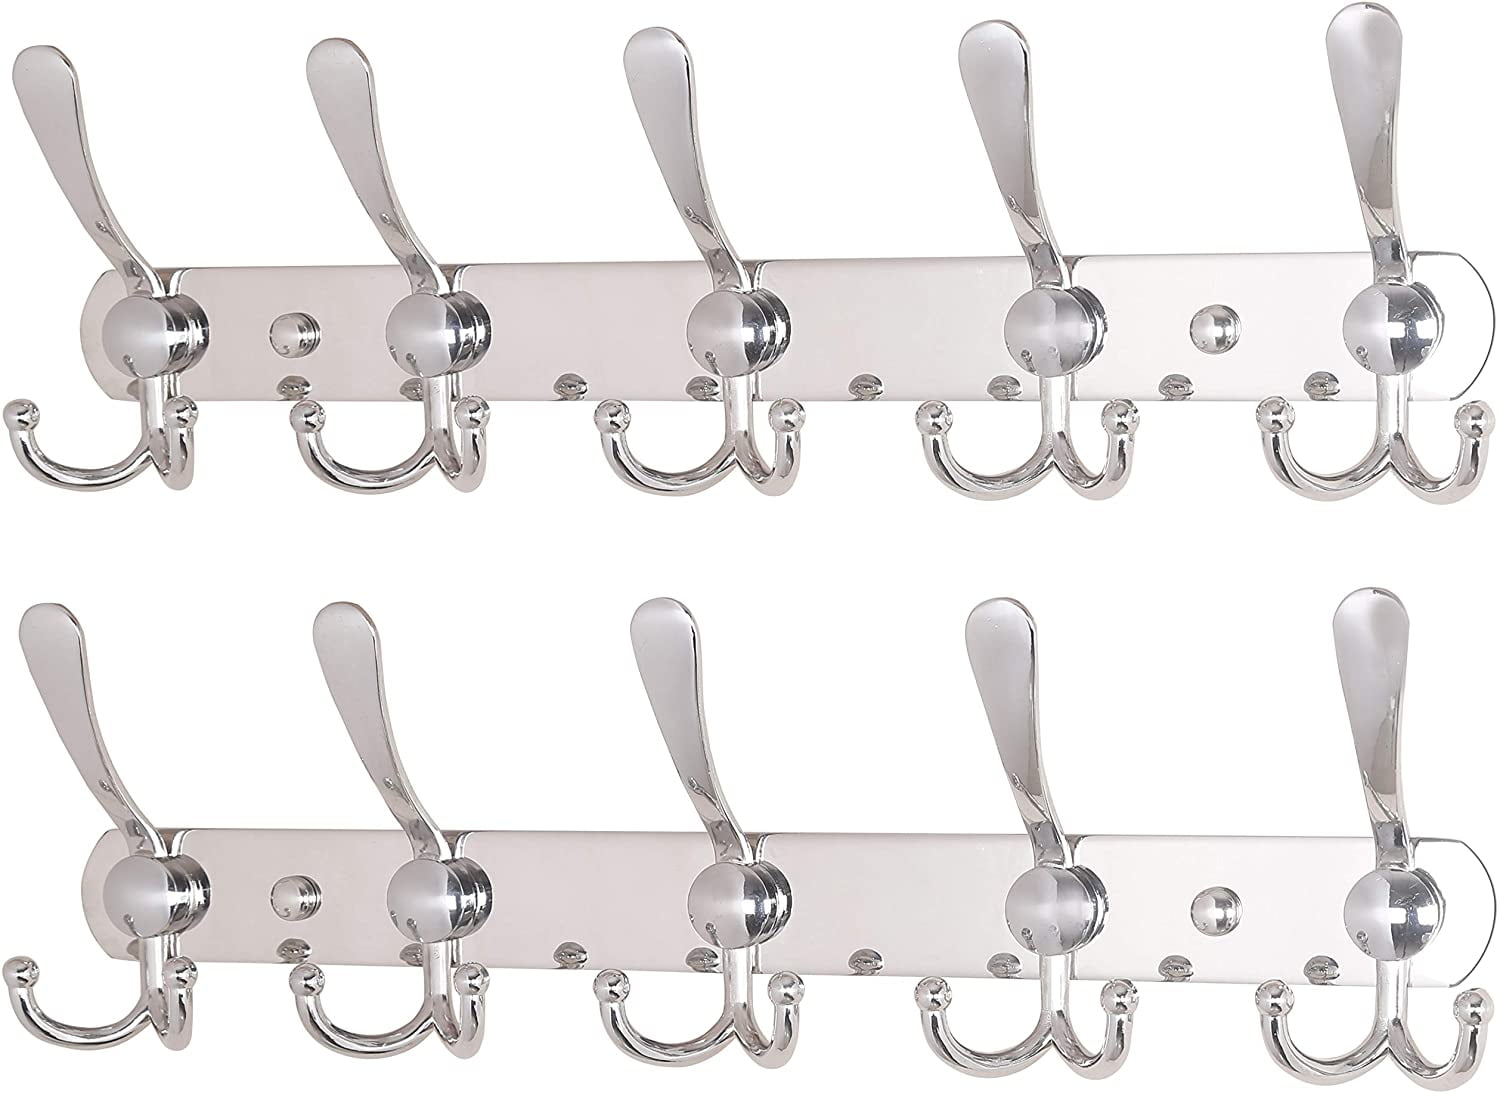 WEBI Sturdy Wall Mounted Tri-Hook Coat Rack/8 Hooks,30 Inches Aluminum/Chrome Finish